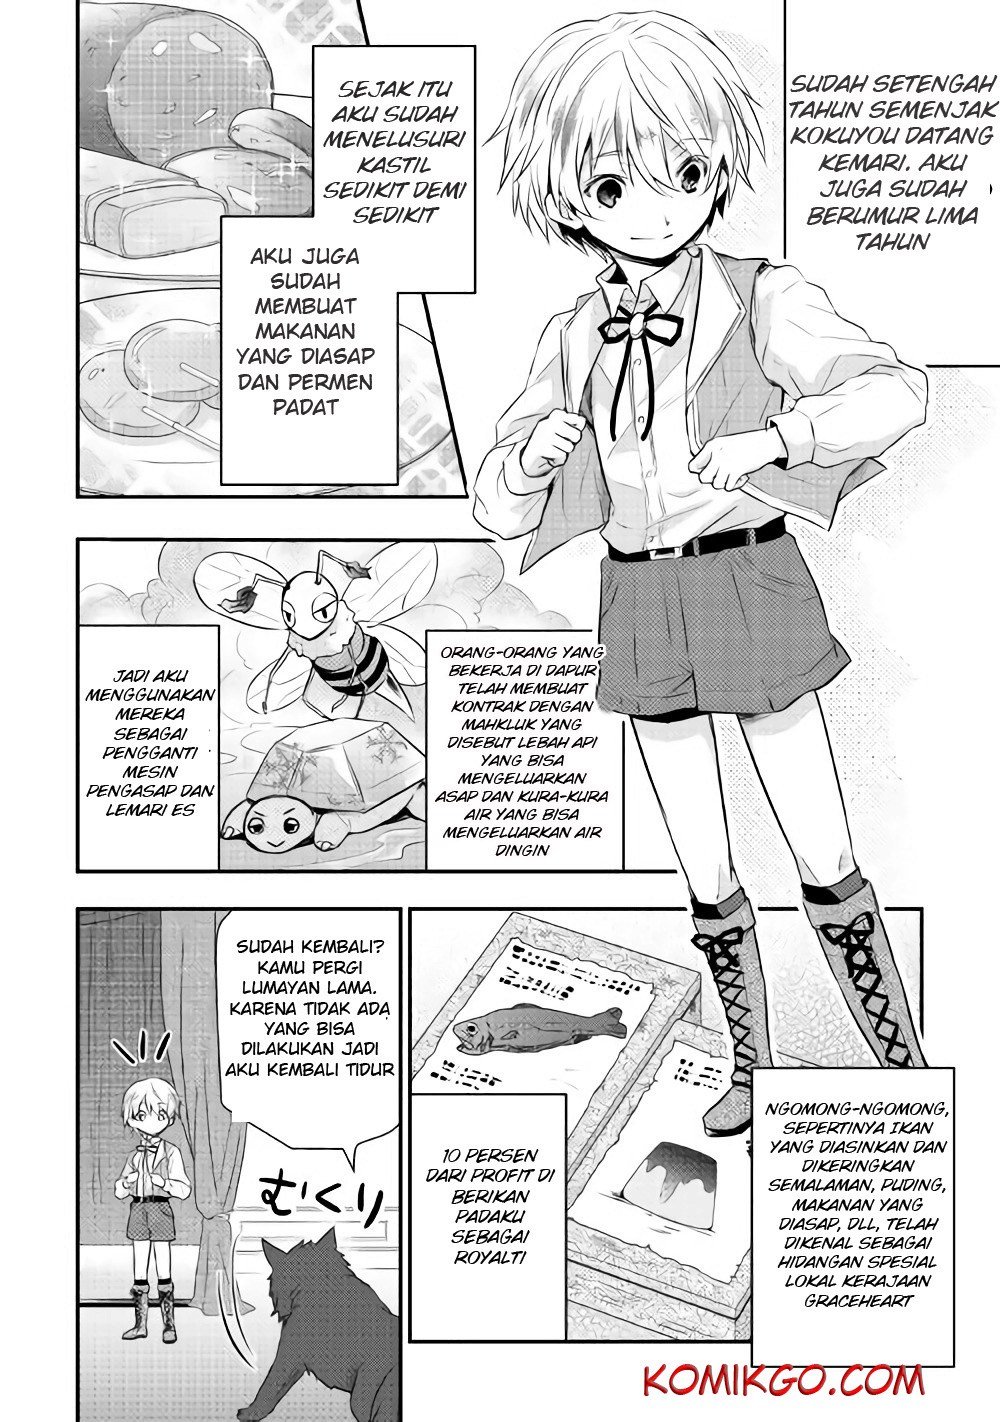 Baca Tensei Ouji wa Daraketai Chapter 4  - GudangKomik